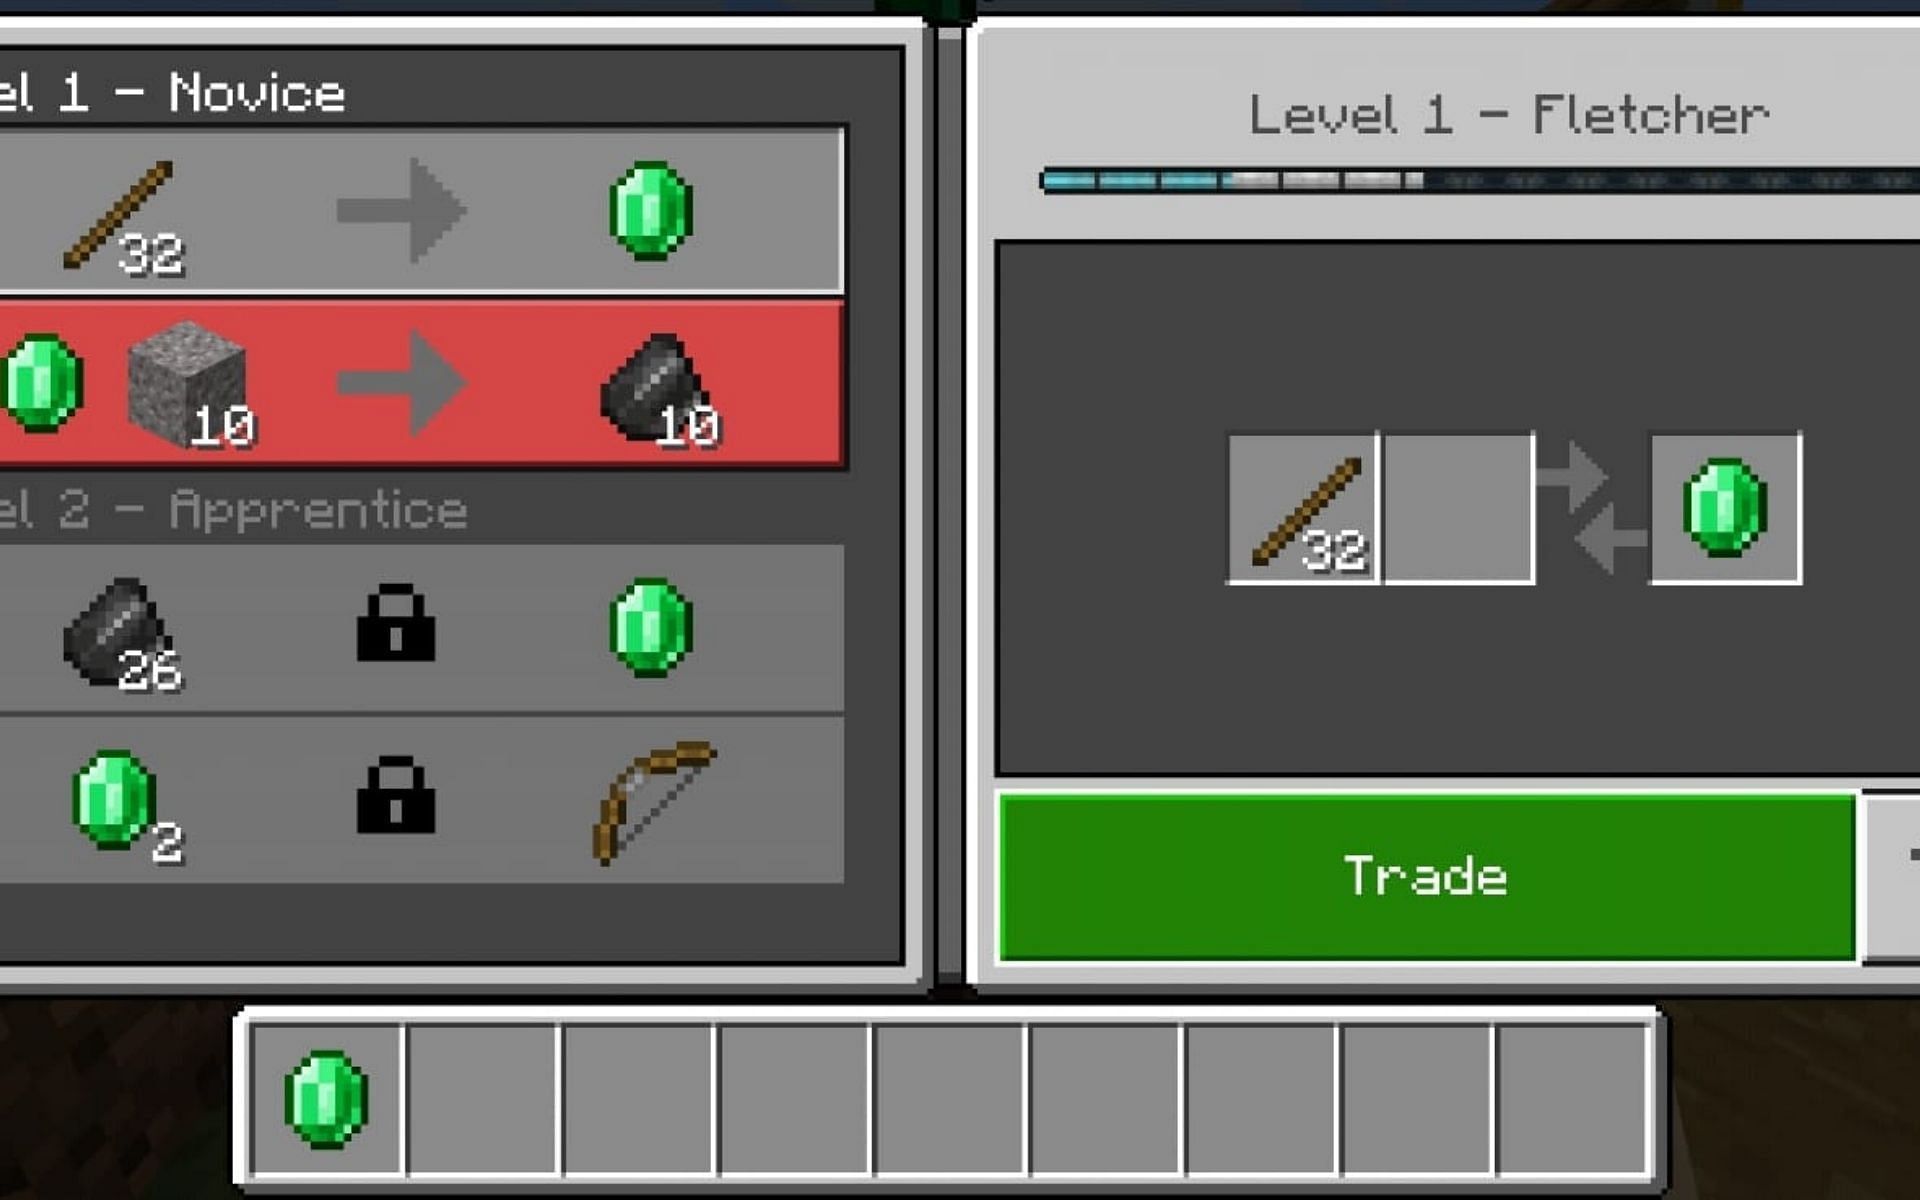 Trade offered by Fletcher (Image via Minecraft)